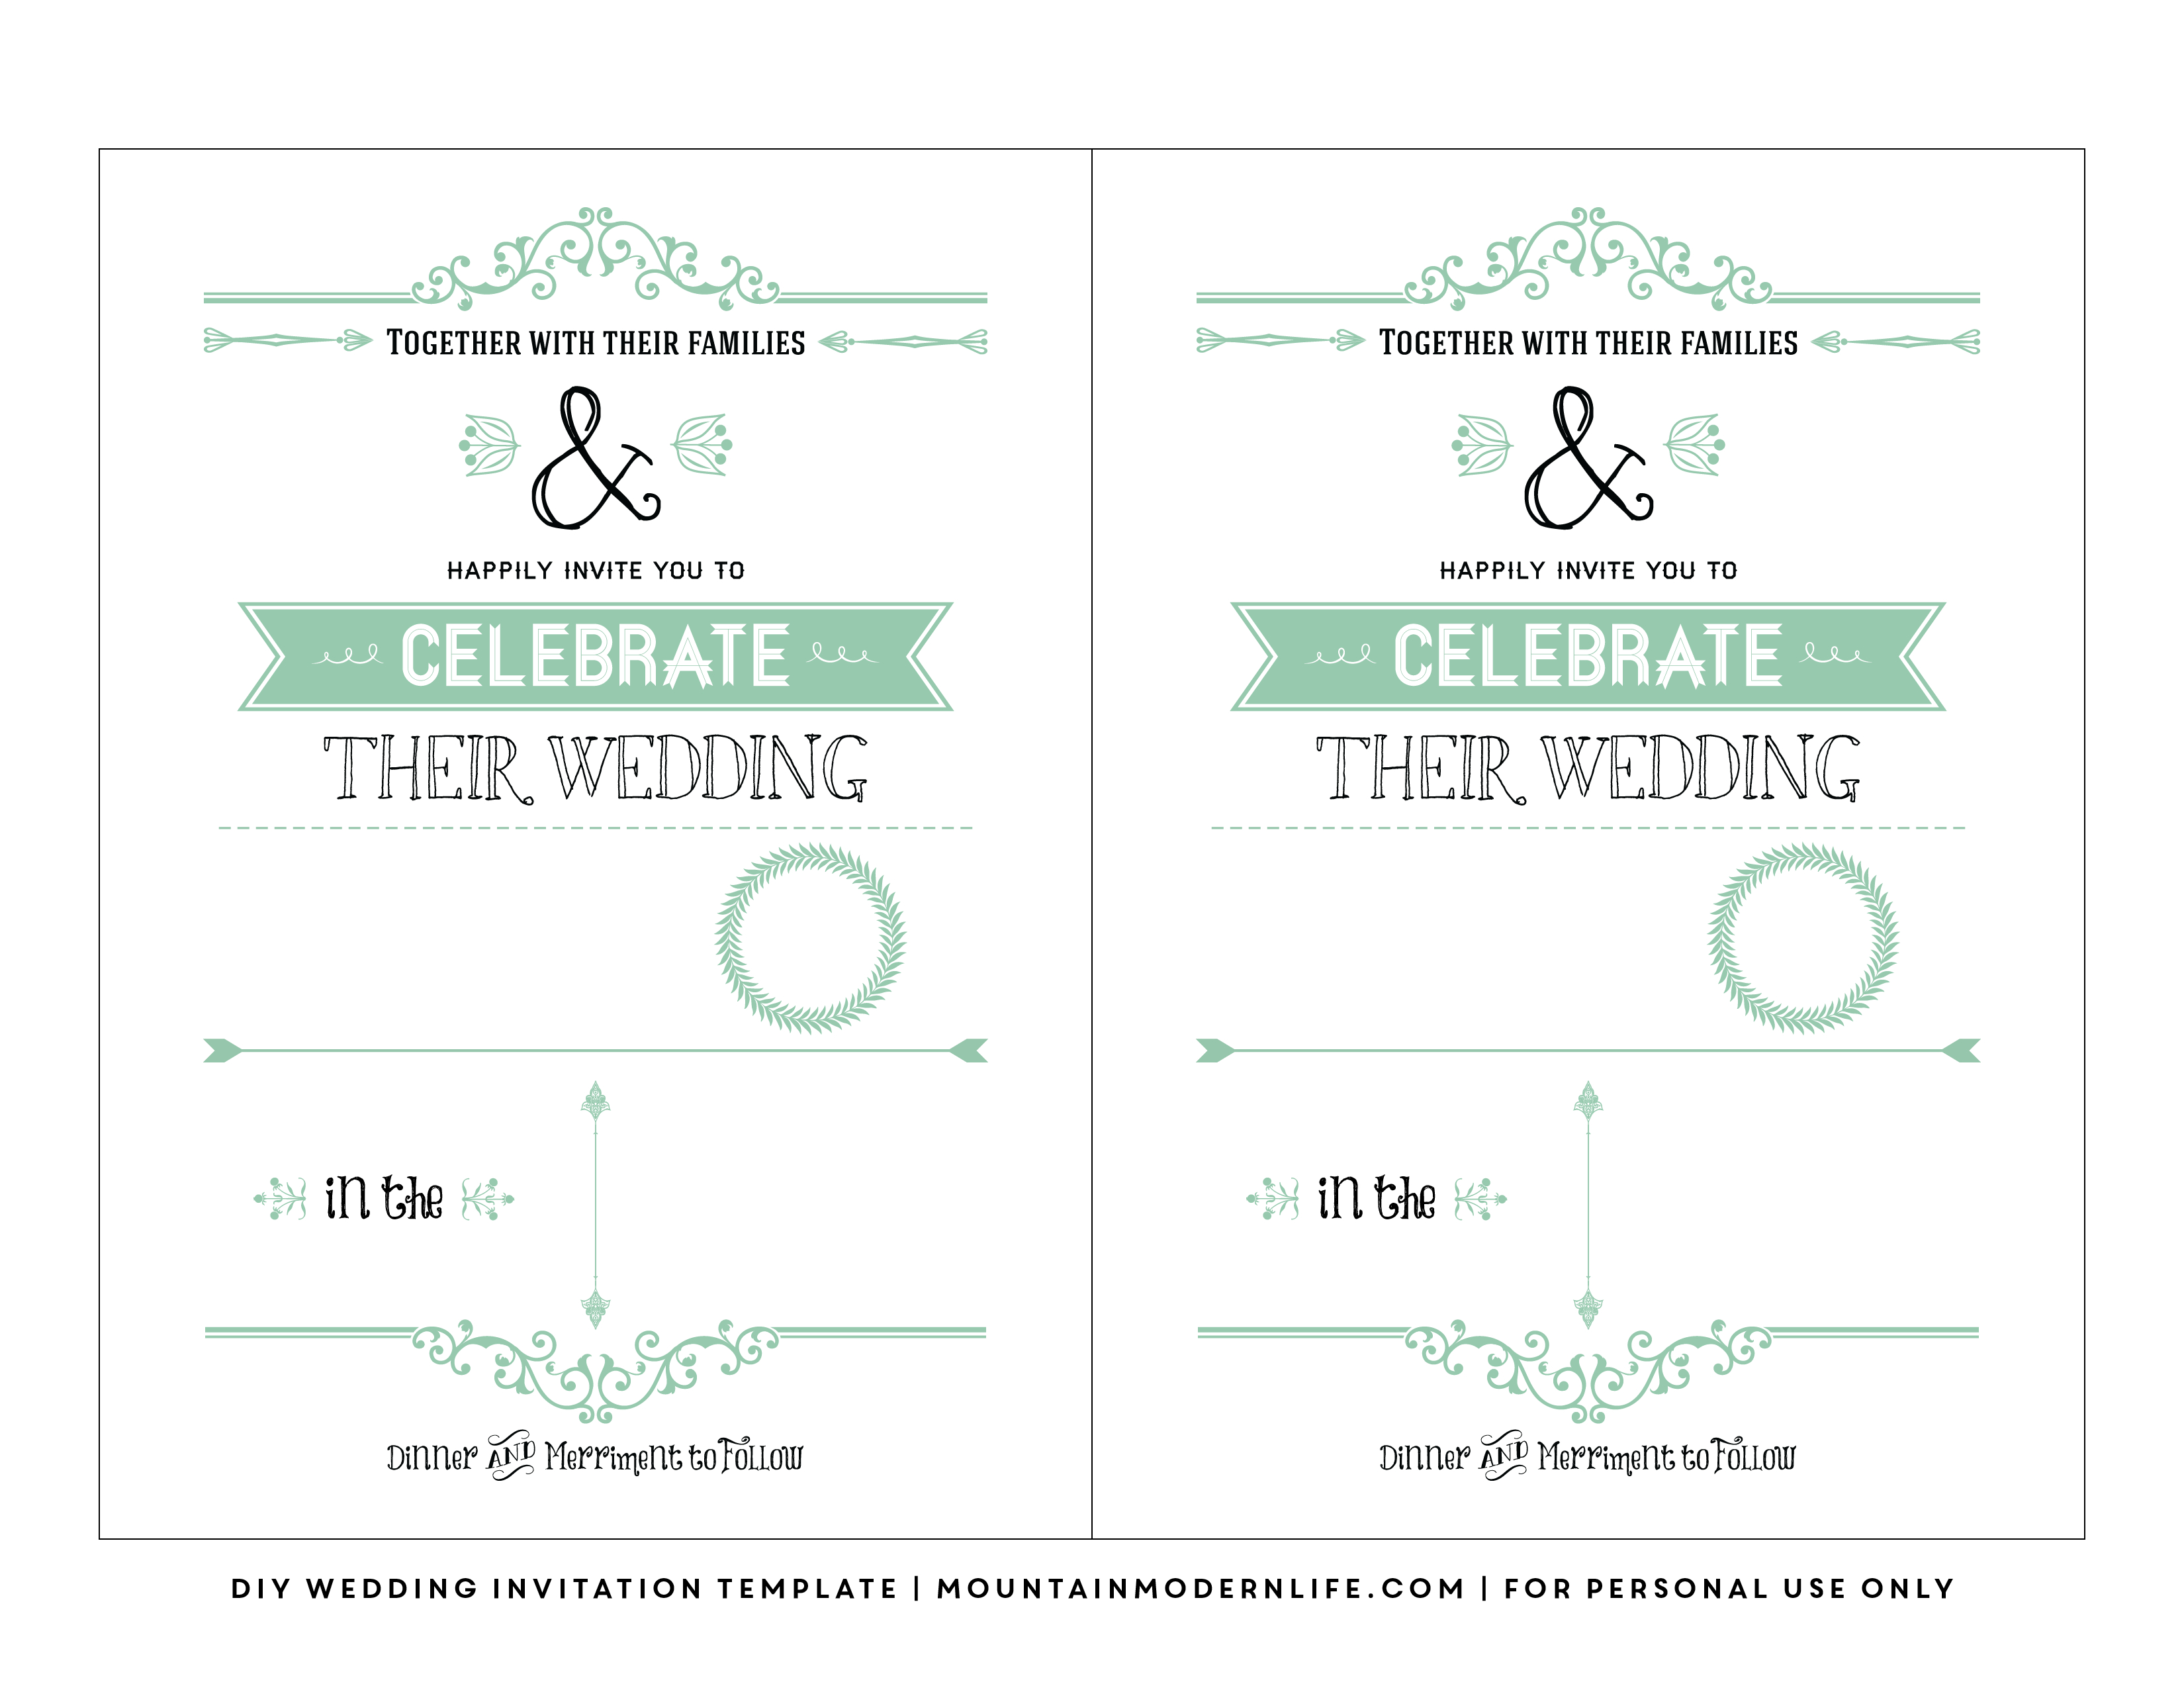 Free Wedding Invitation Template | Mountainmodernlife - Free Printable Invitations Templates